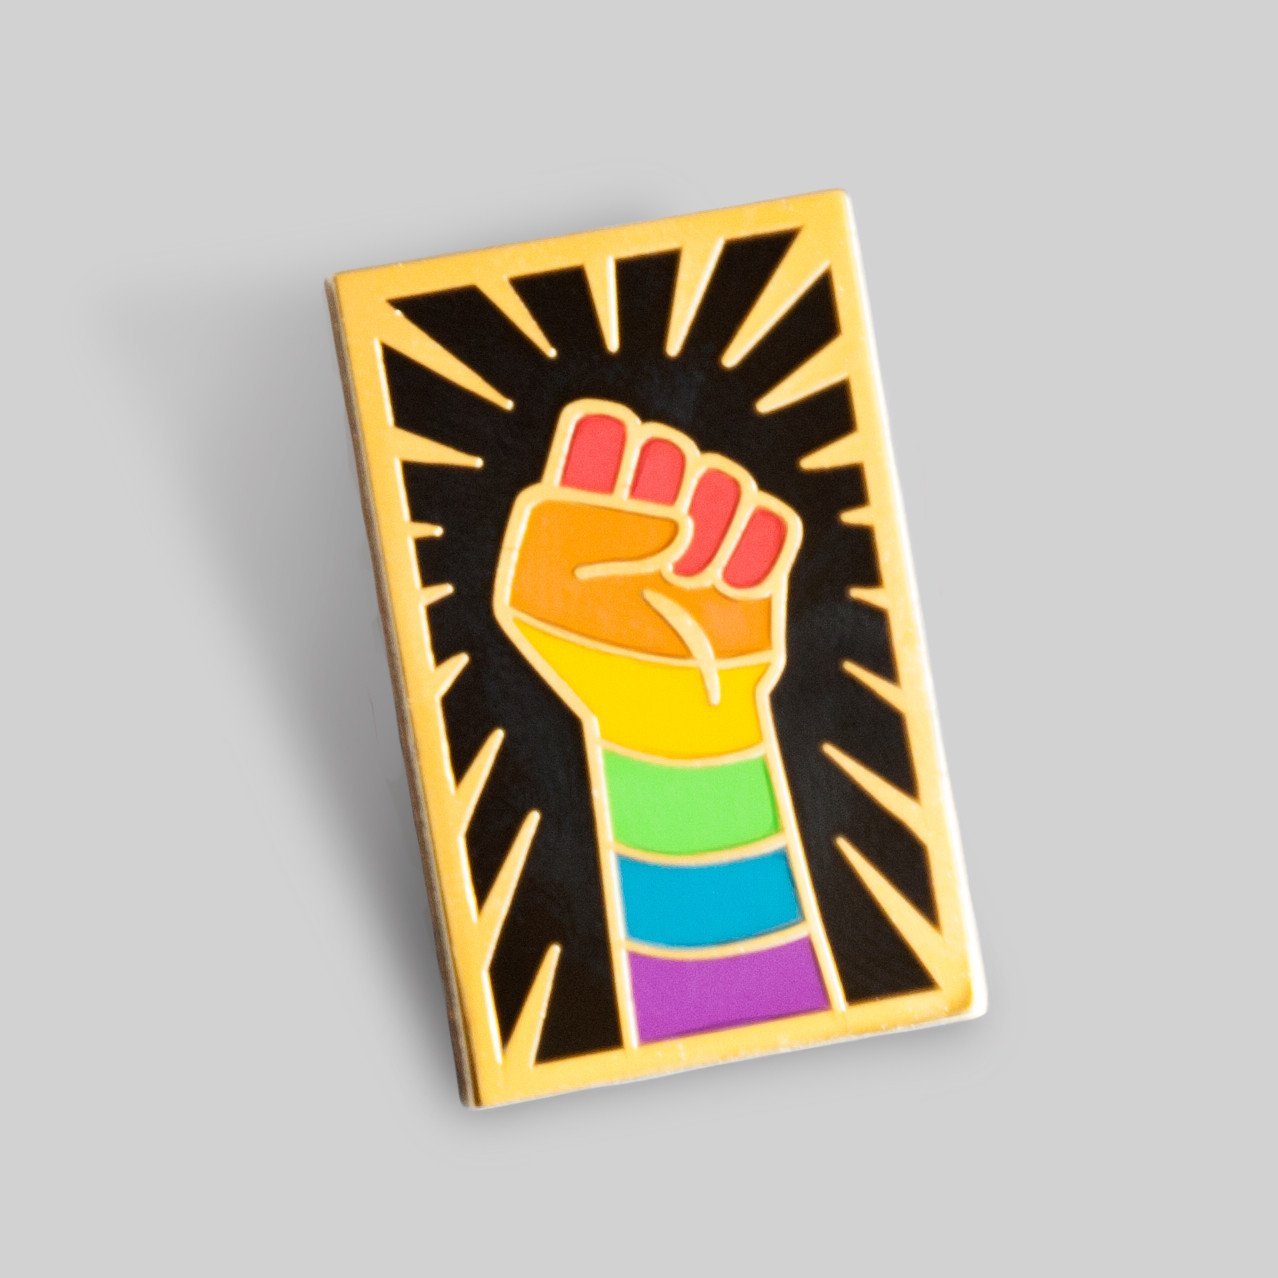 Gaypin - Rainbow Resist Pin